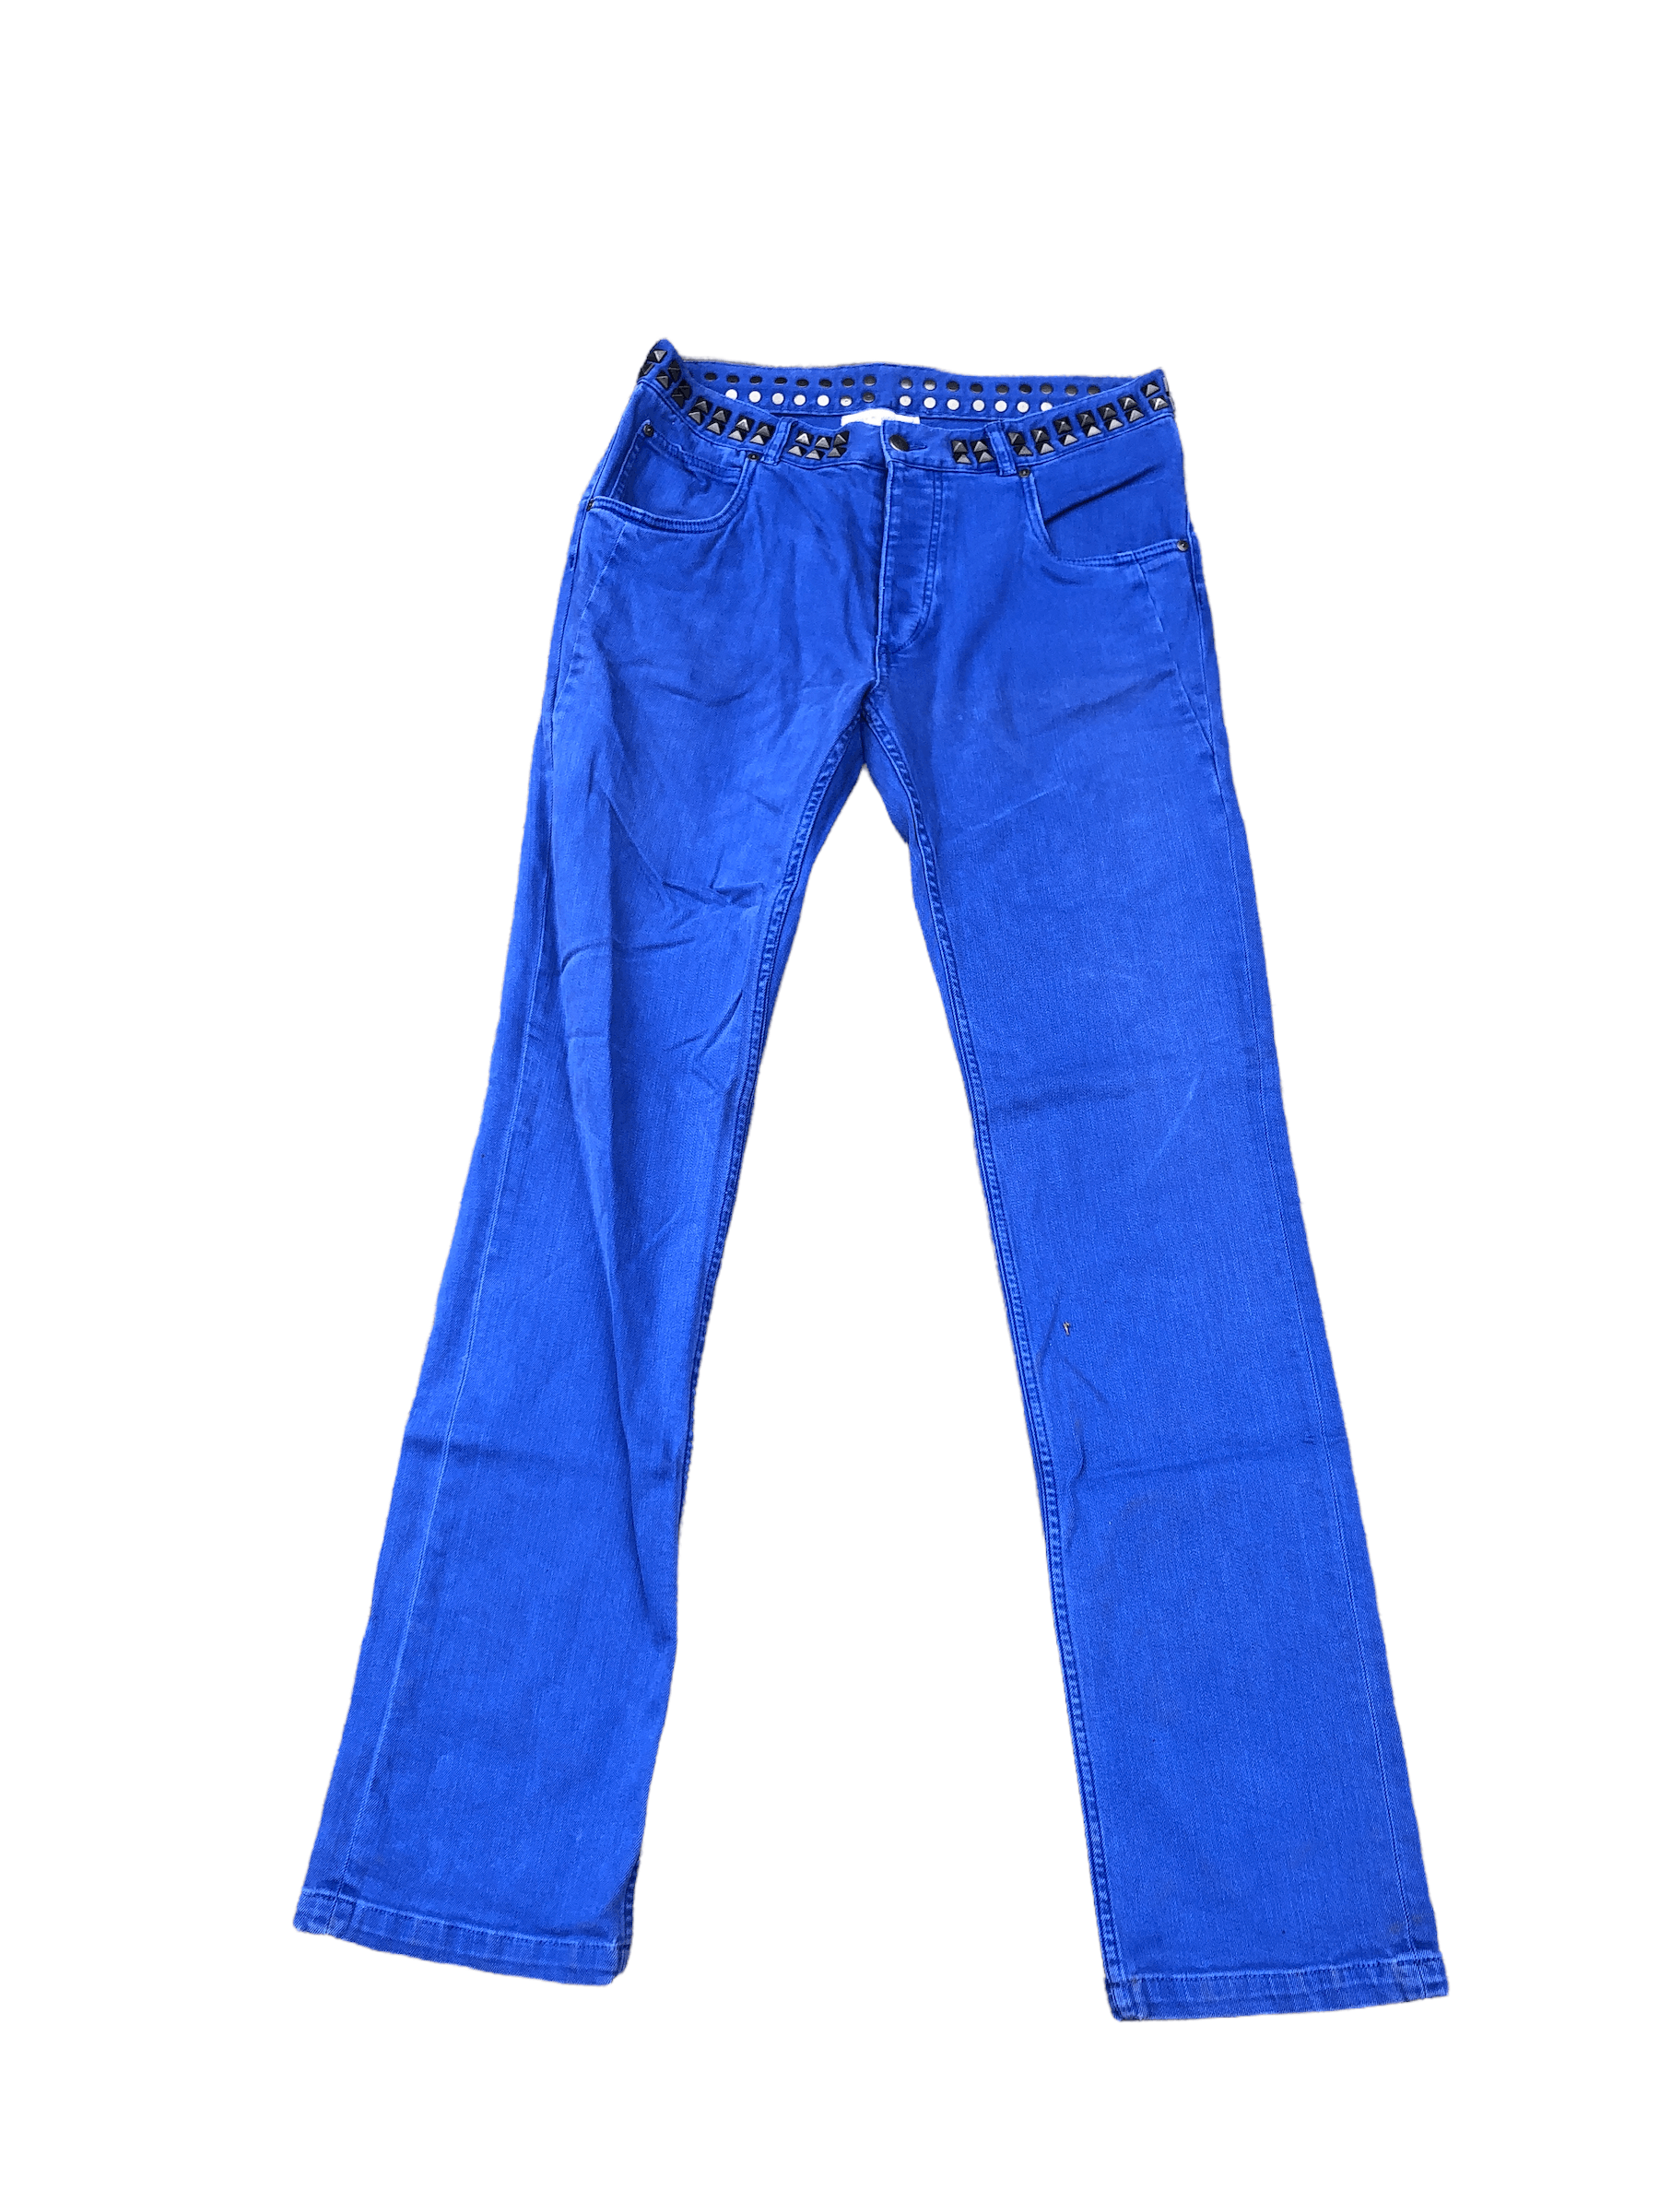 Vintage RARE Matthew Williamson X H&M Studded Jeans Size 34 Blue Size US 34 / EU 50 - 9 Thumbnail